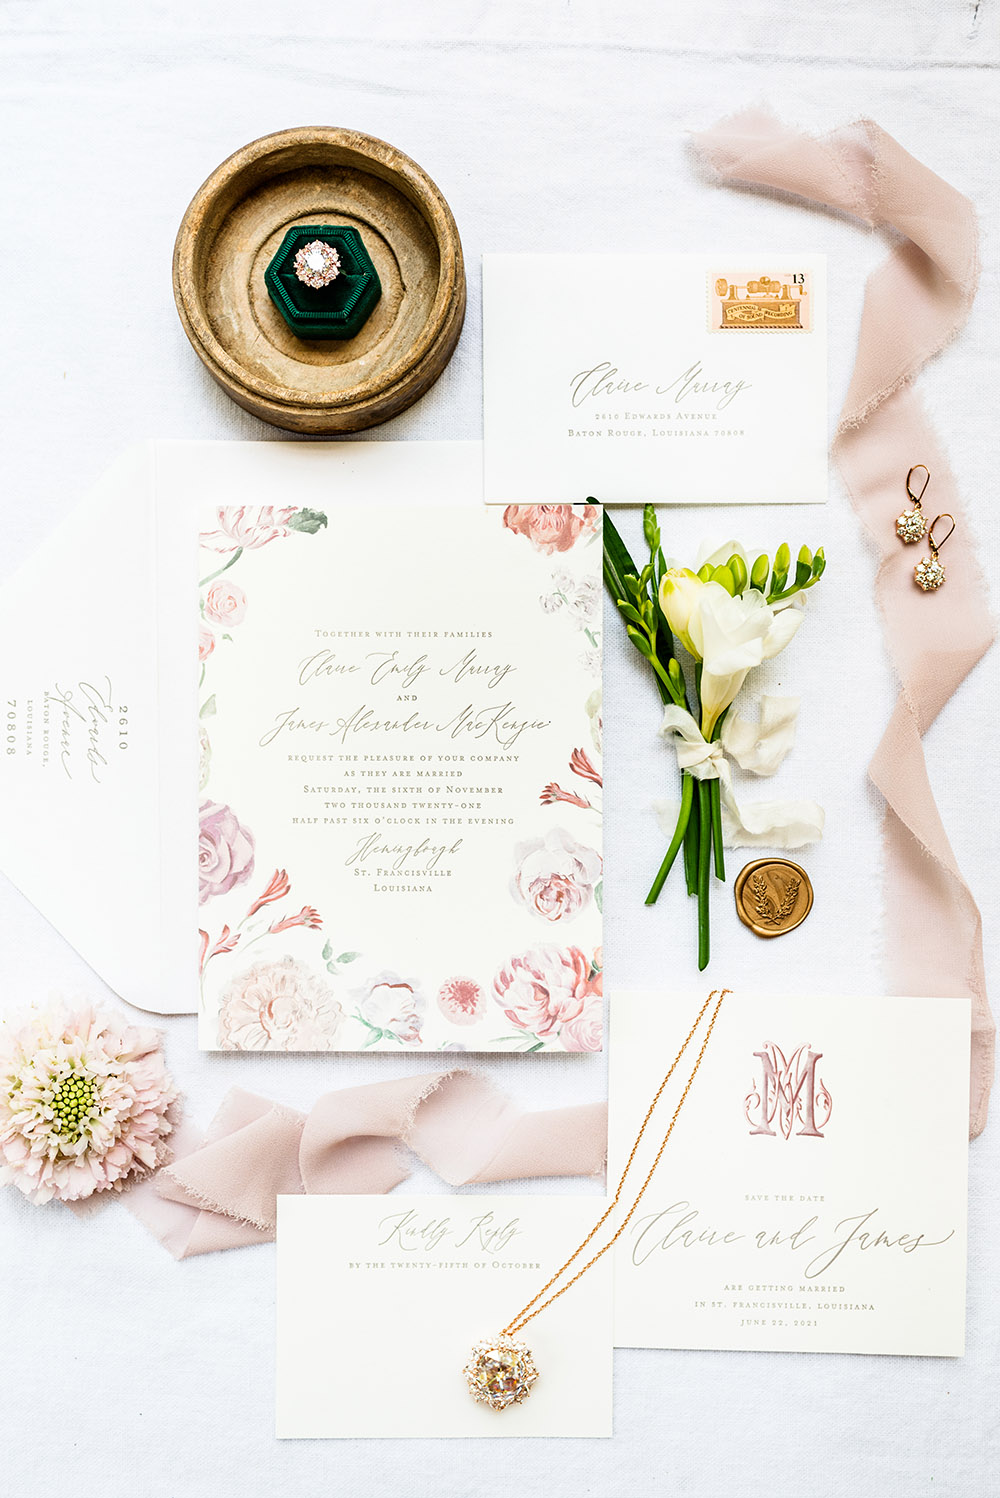 Letterpress wedding invitations and moissanite jewelry